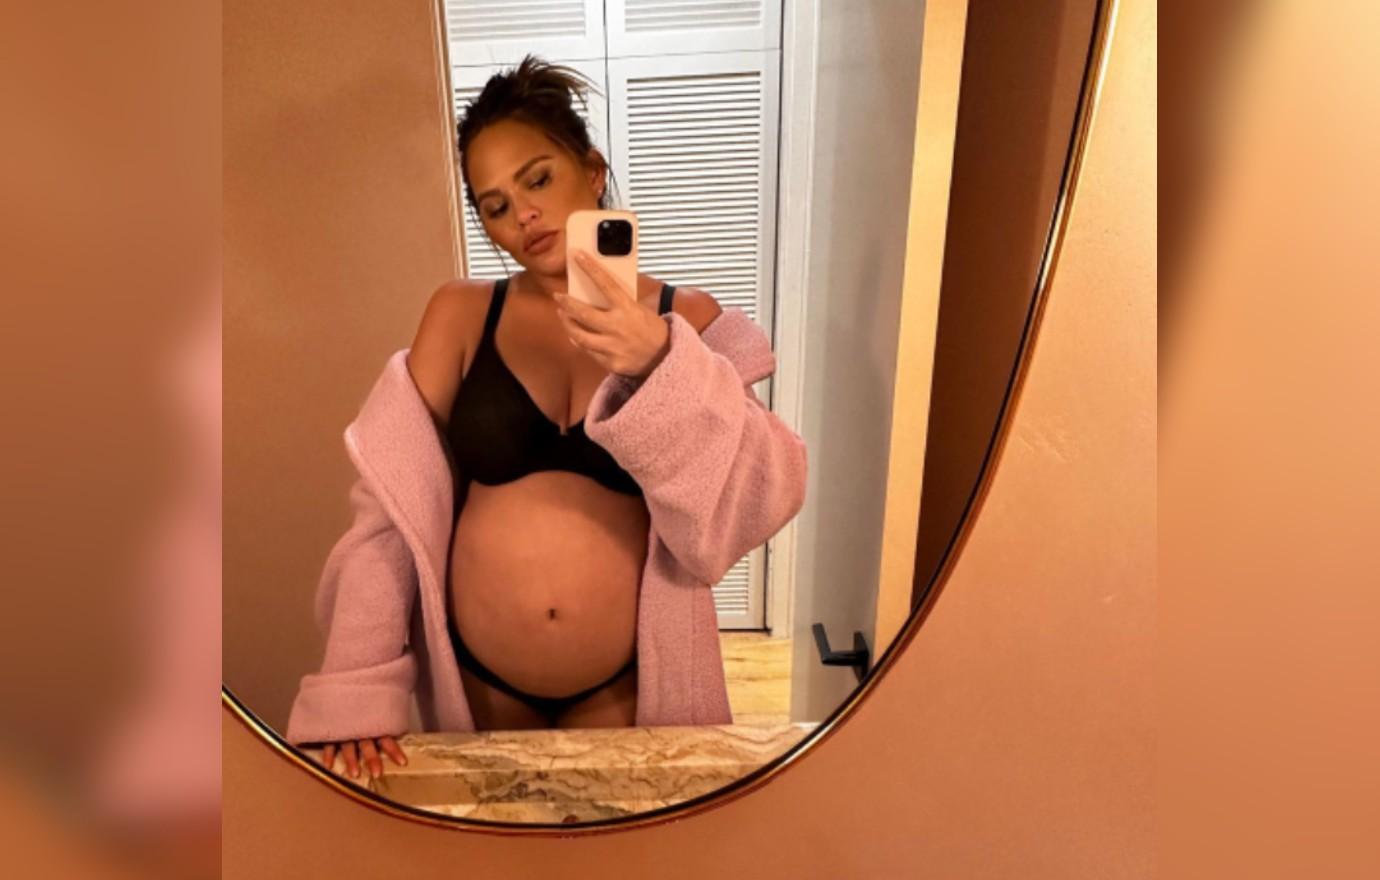 Pregnant Chrissy Teigen Shows Bare Baby Bump in Bathroom Selfie